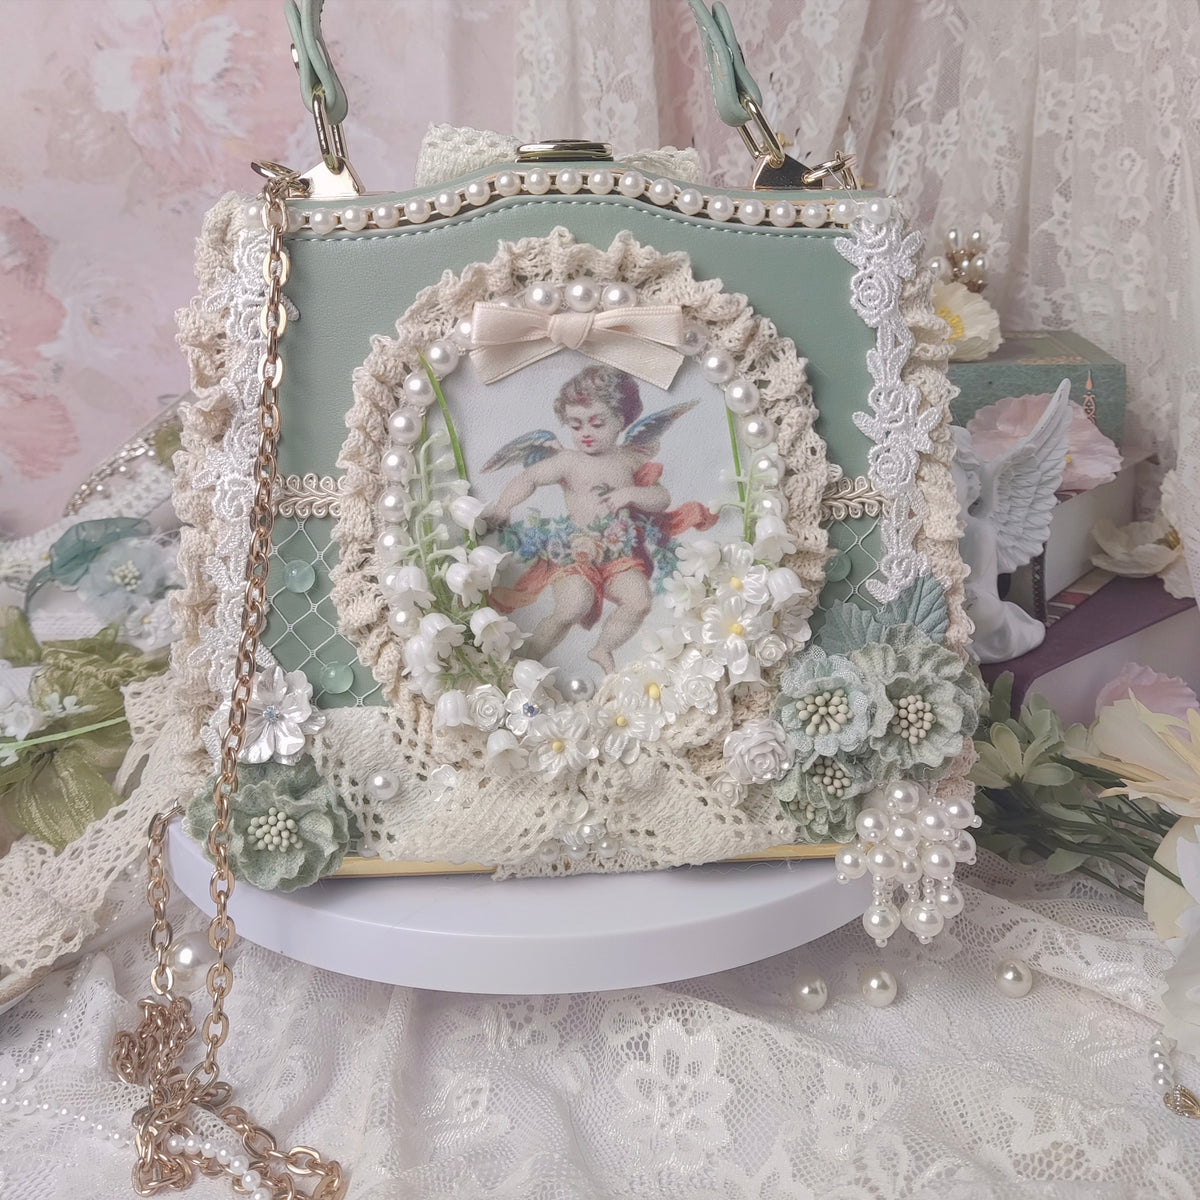 Handmade Fairycore Pearl Studded Hand Bag – Retro Fairy